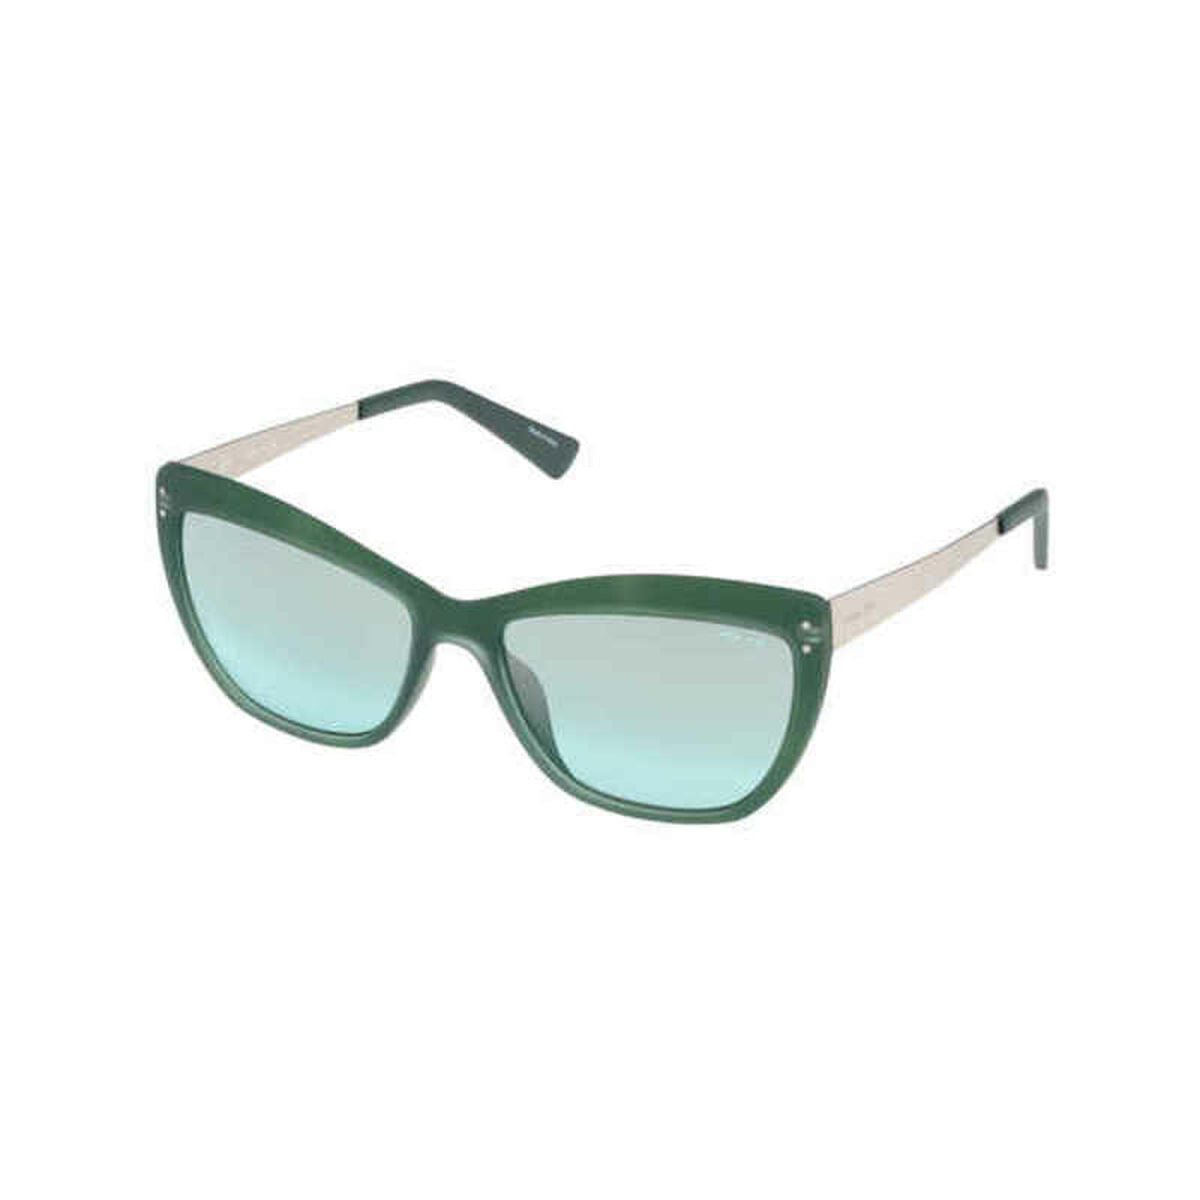 Kaufe Damensonnenbrille Police S1971M56Z48X grün ø 56 mm bei AWK Flagship um € 49.00